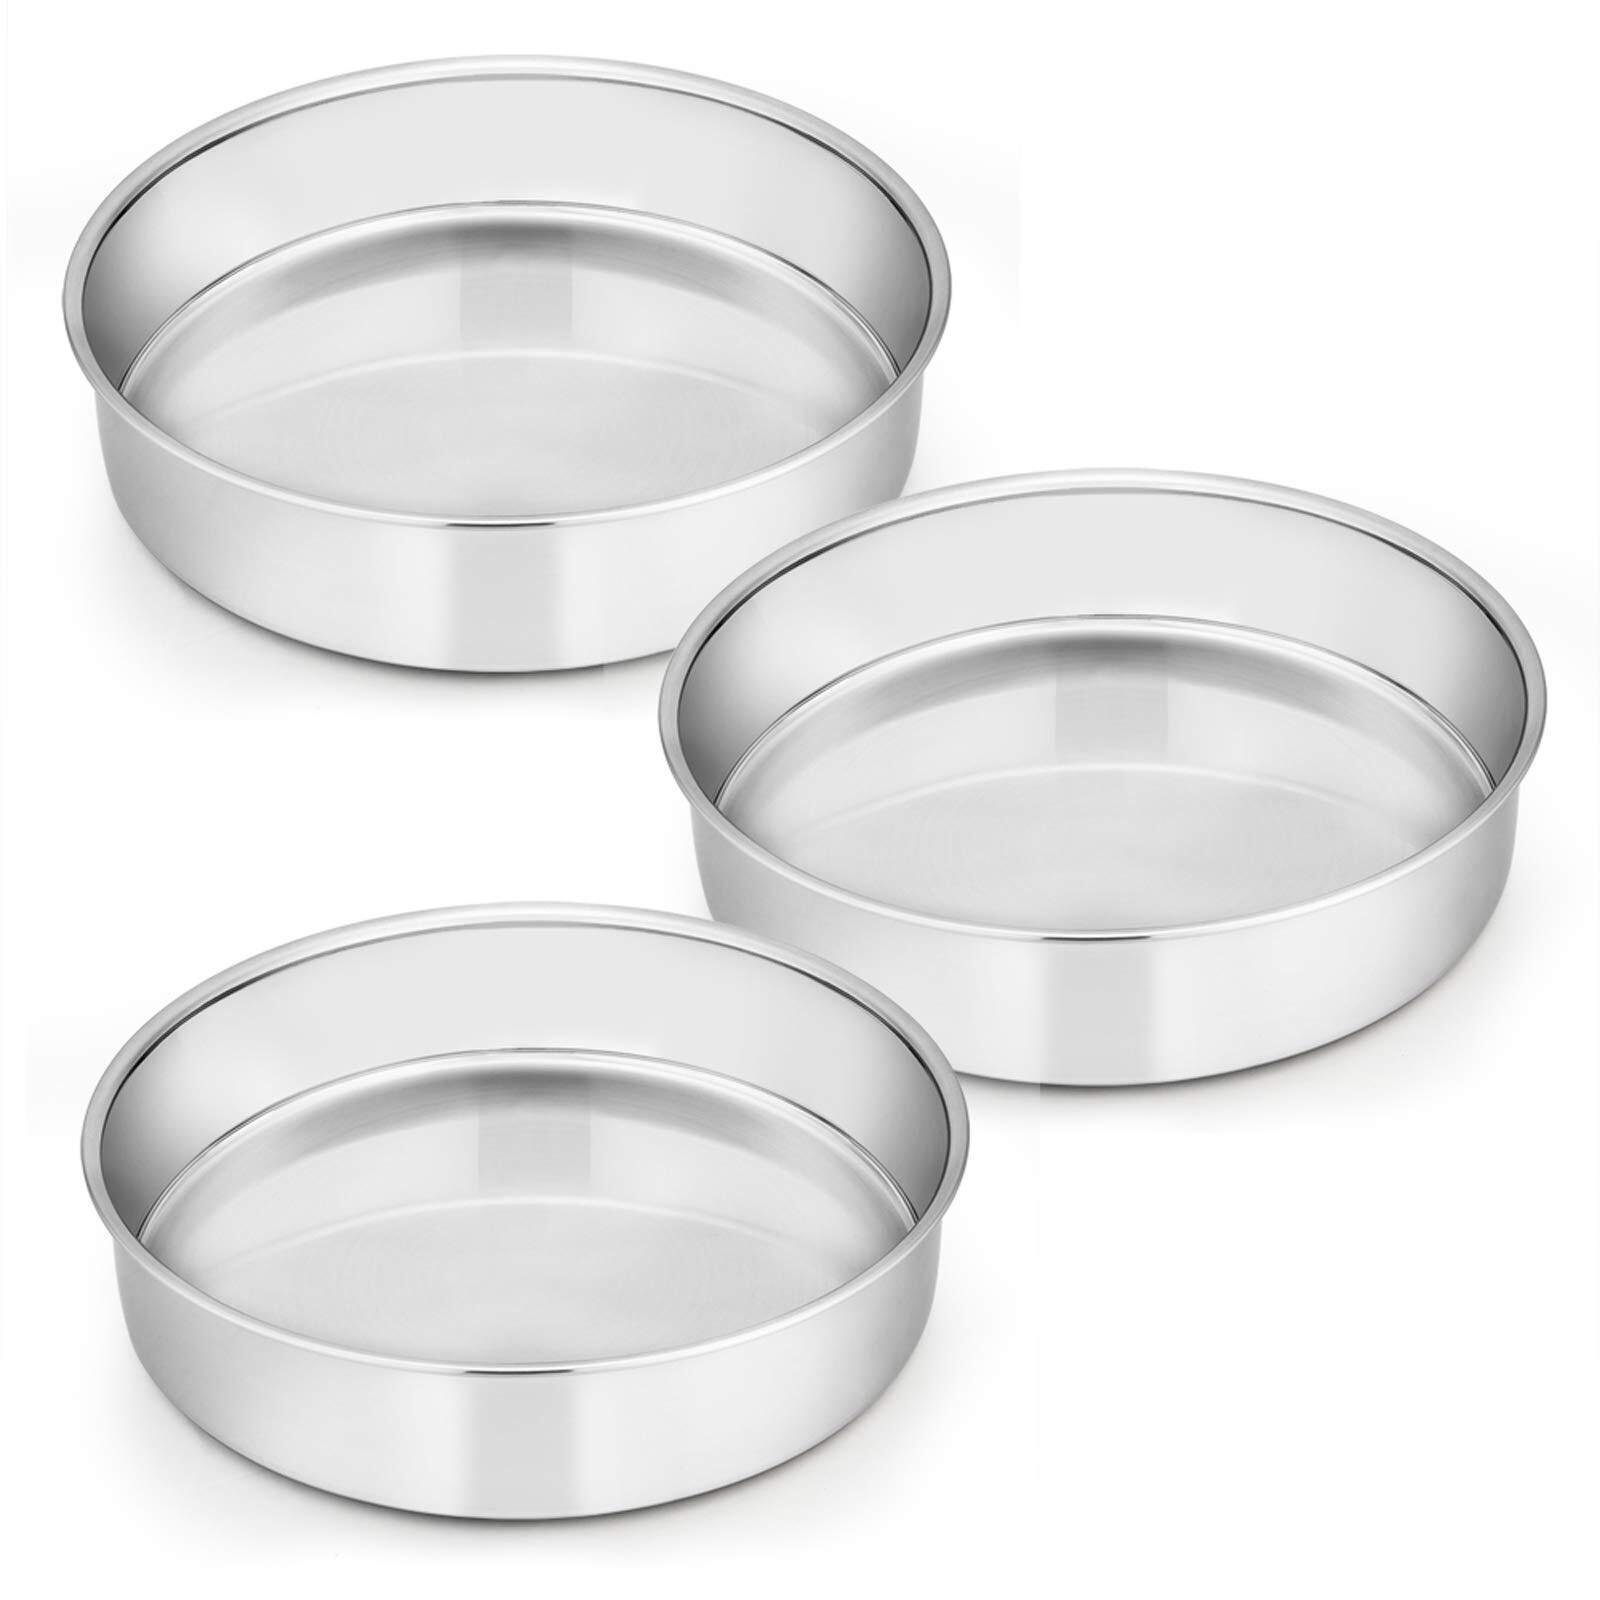 8 Inch Cake Pan Set of 3 Stainless Steel Round Layer Cake Baking Pans Non-Tox...